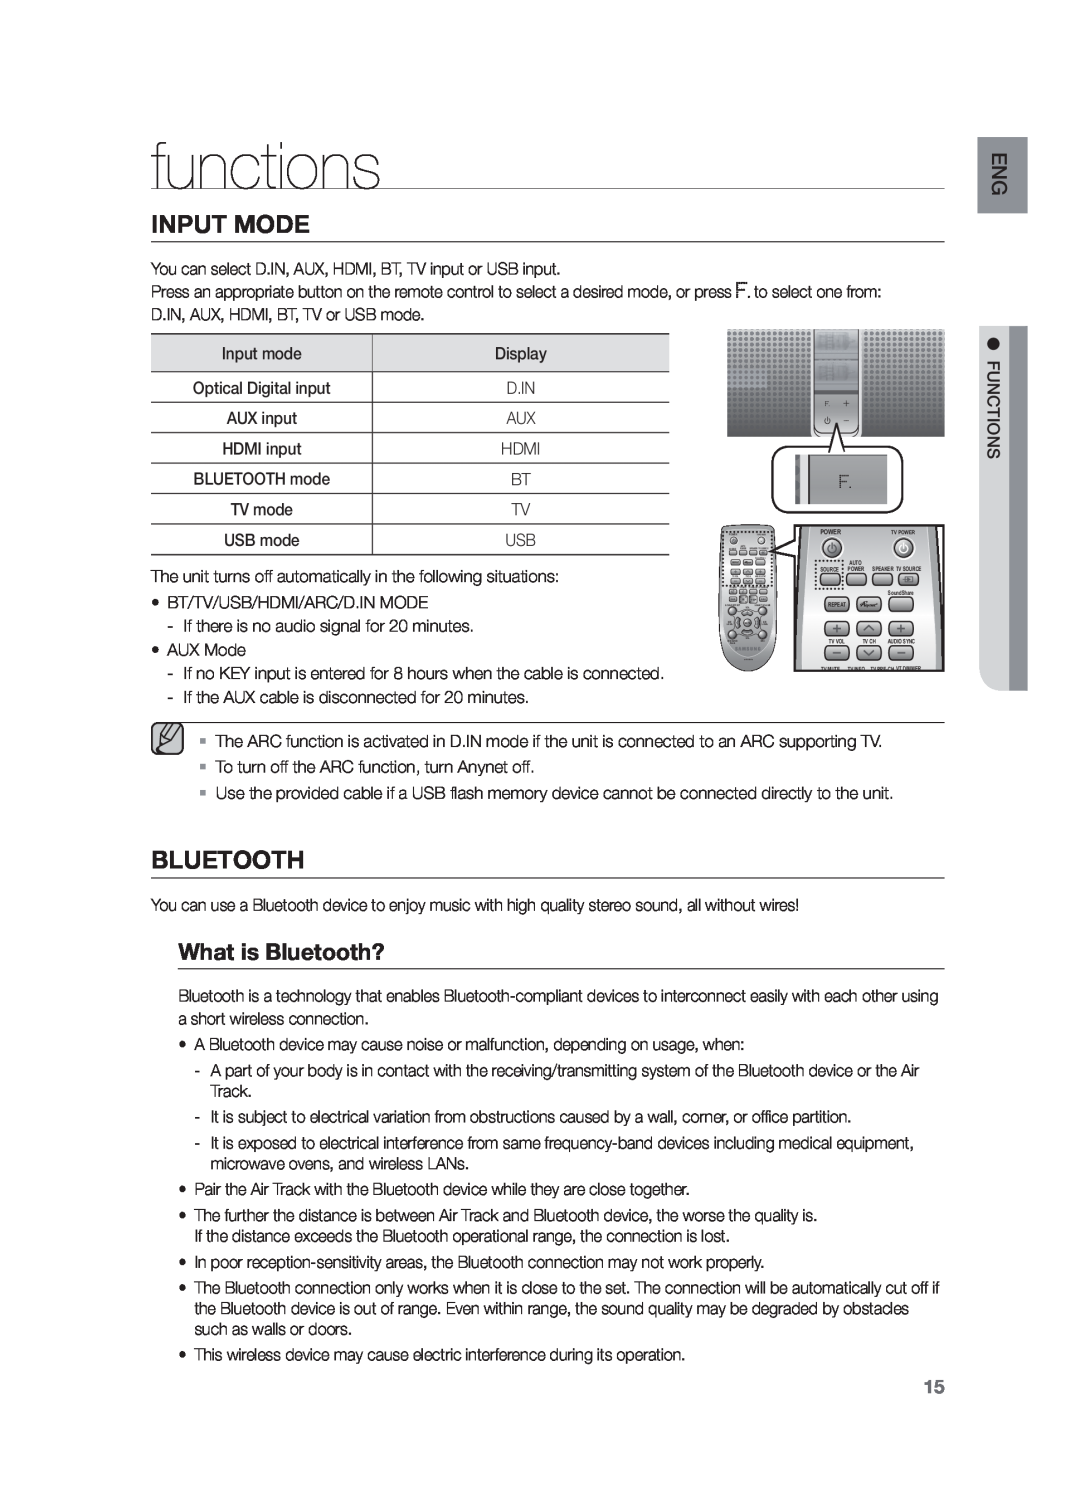 Samsung HW-F751/XN, HW-F751/TK, HW-F751/EN manual functions, Input Mode, What is Bluetooth? 